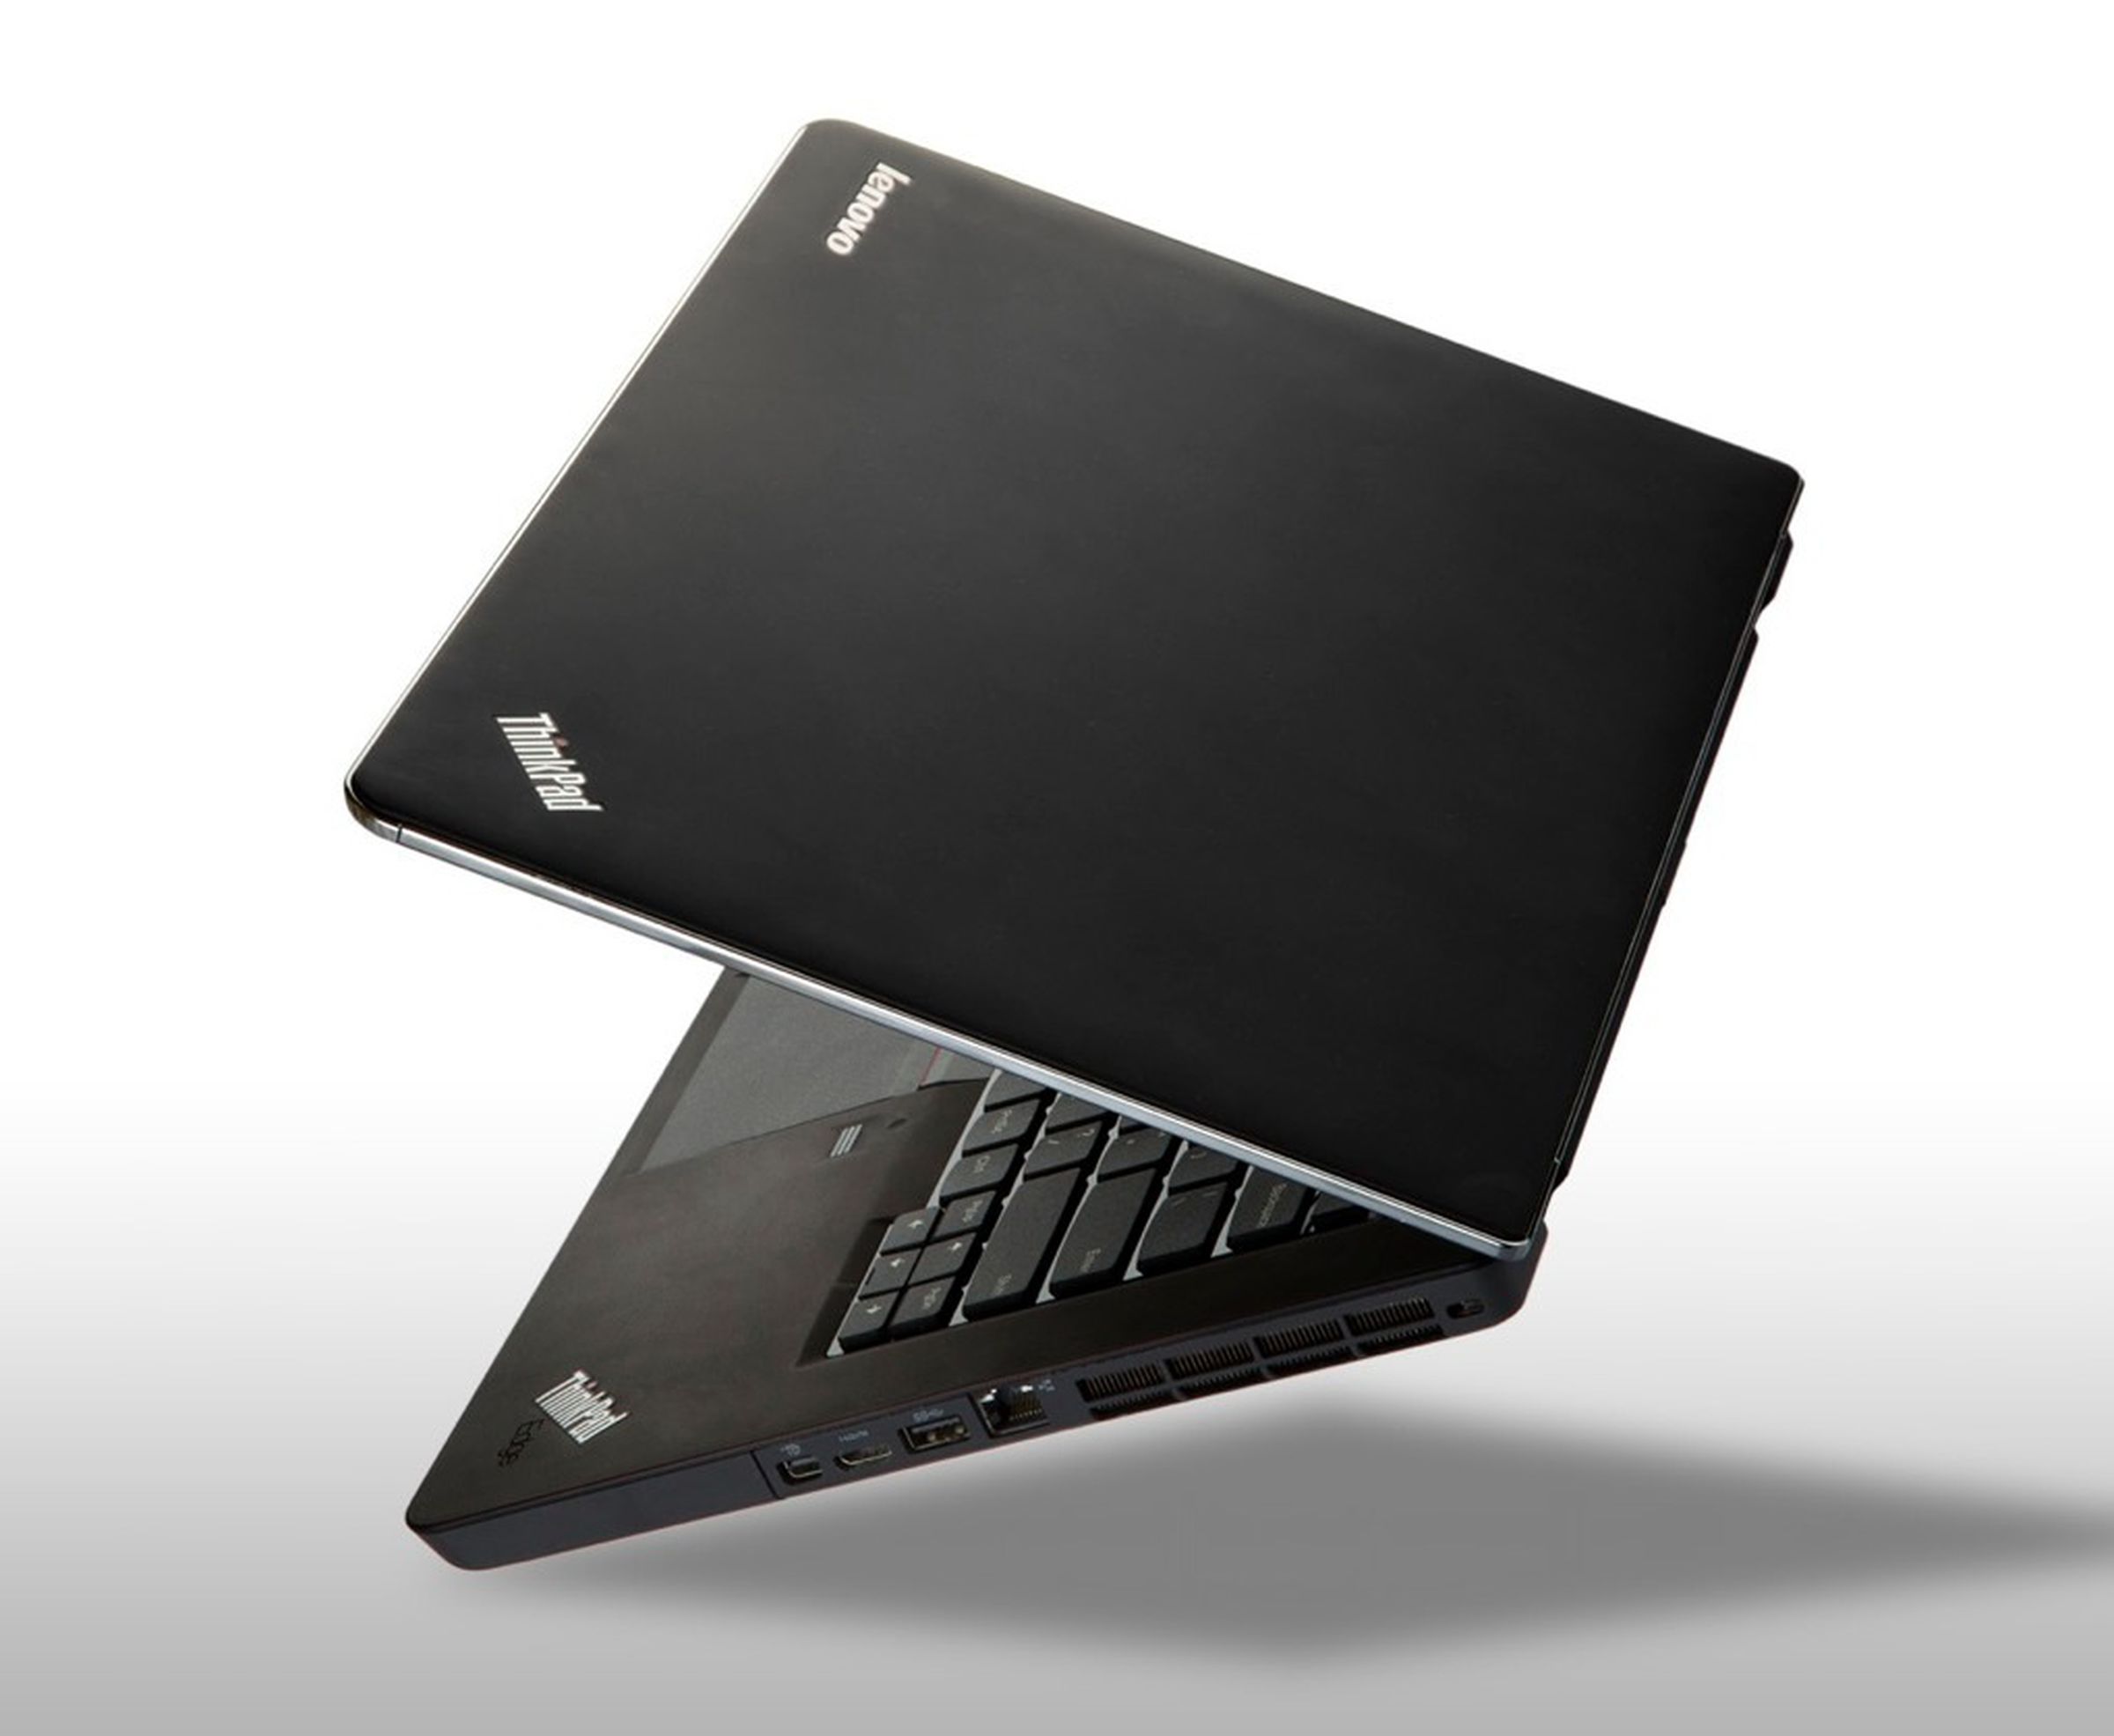 Lenovo ThinkPad Edge S430 press photos